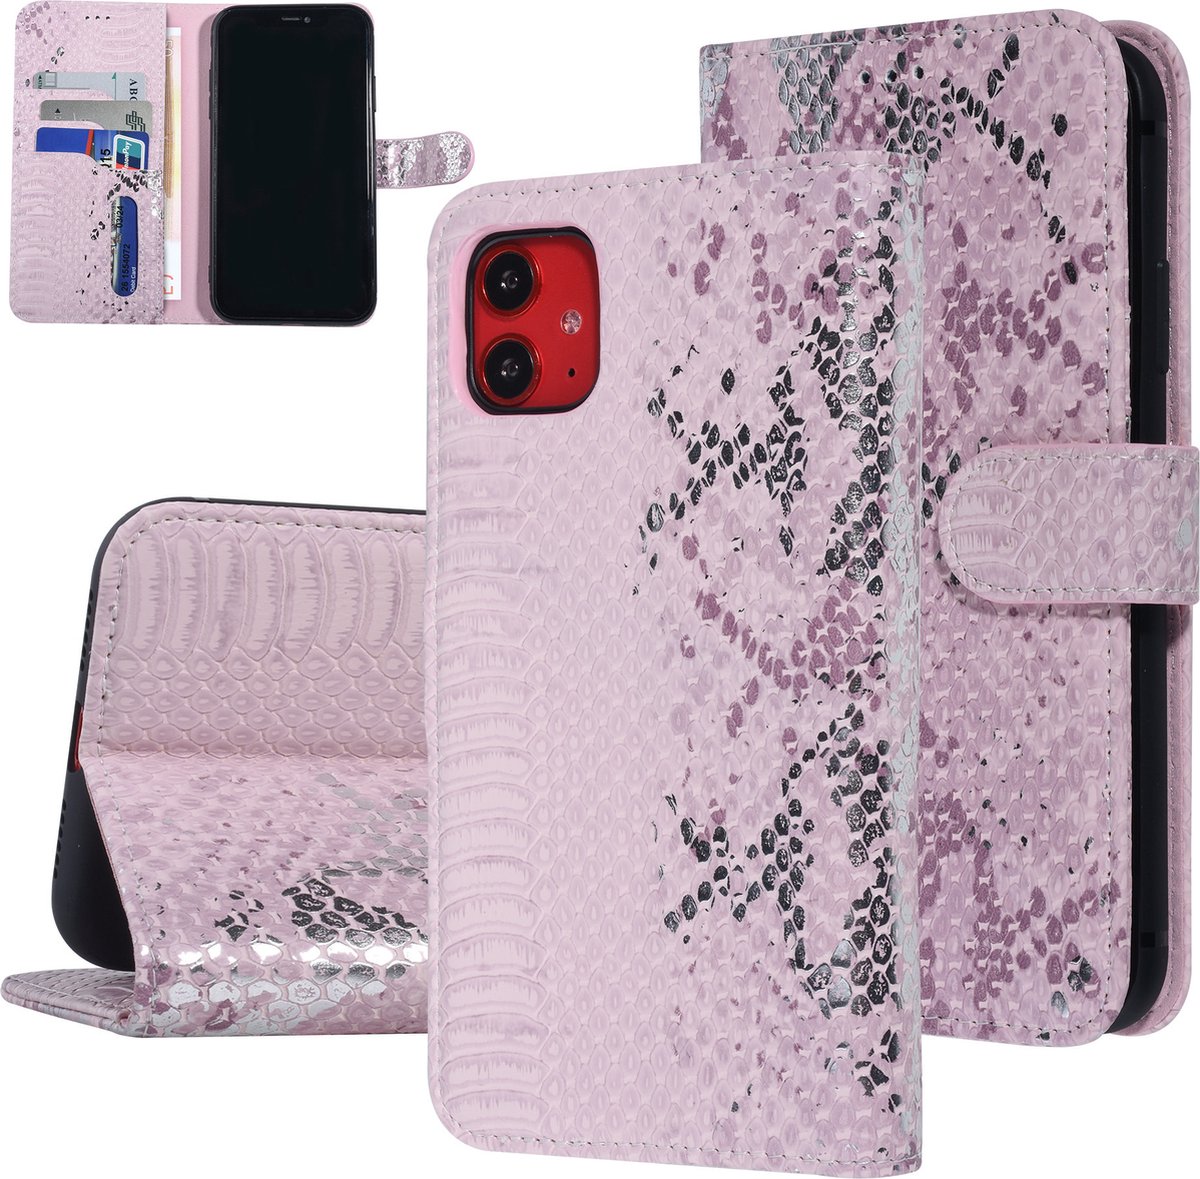 UNIQ Accessory iPhone 11 Slangenleer Booktype hoesje - Pasjeshouder voor 3 pasjes - Roze